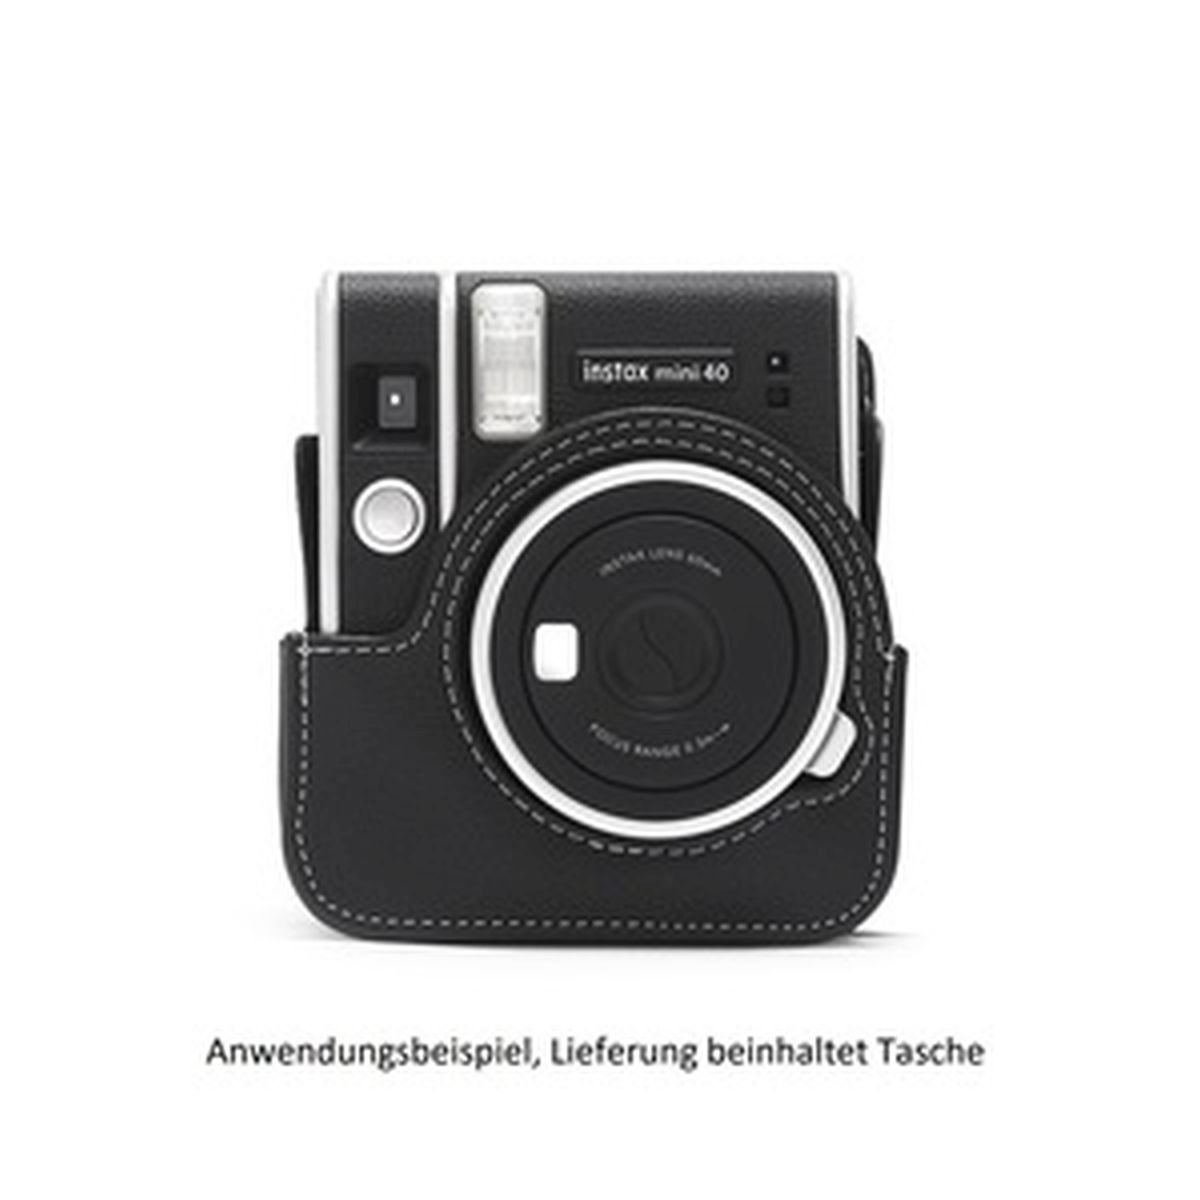 Fujifilm Instax Mini 40 Tasche schwarz